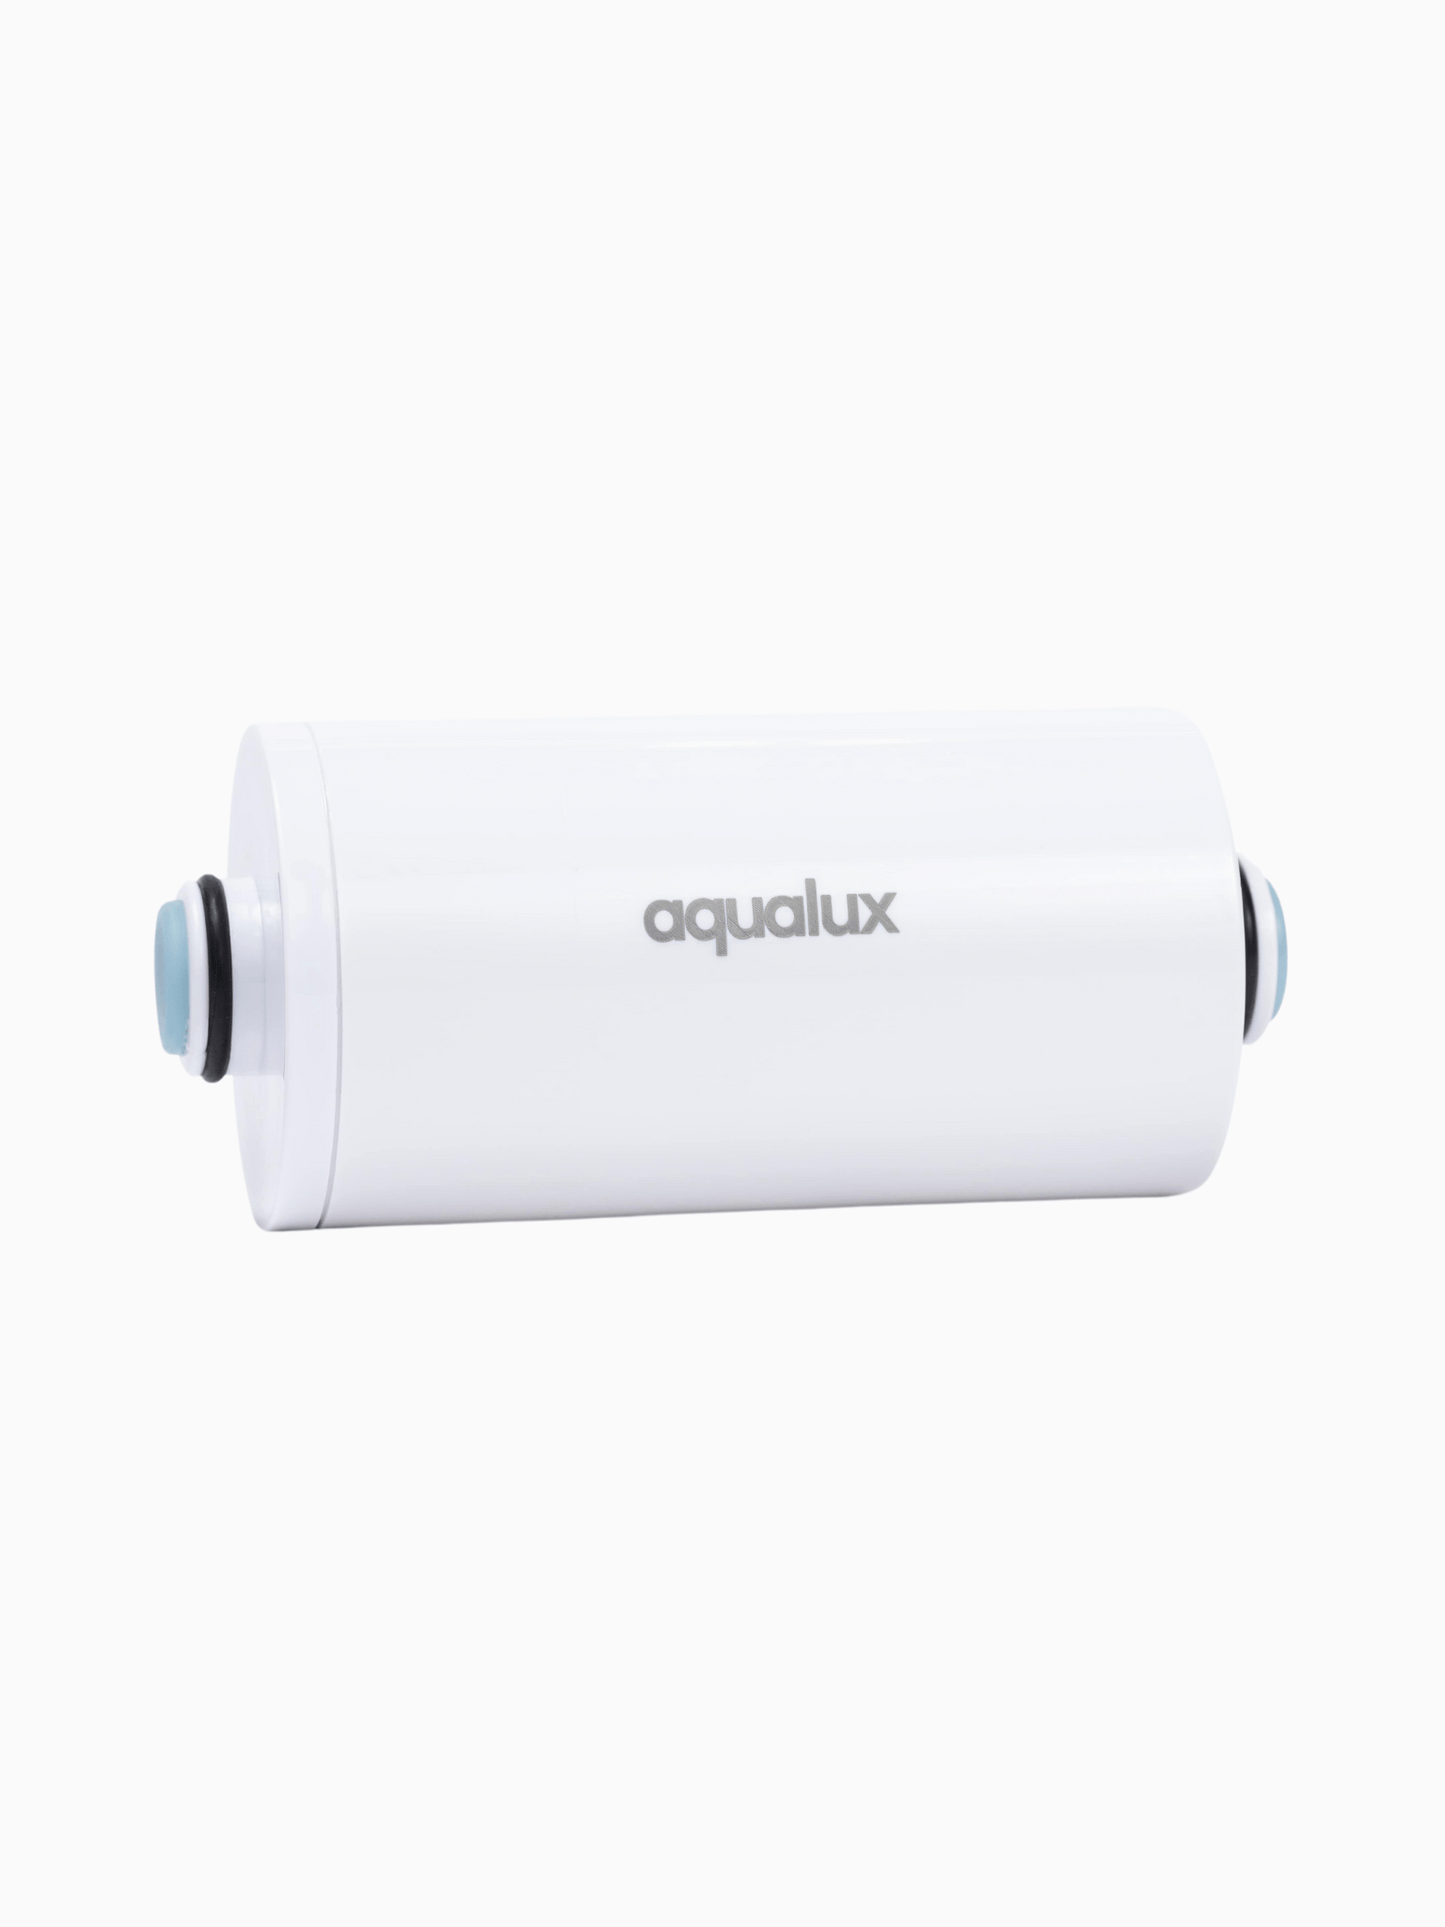 Aqualux Replacement Filter